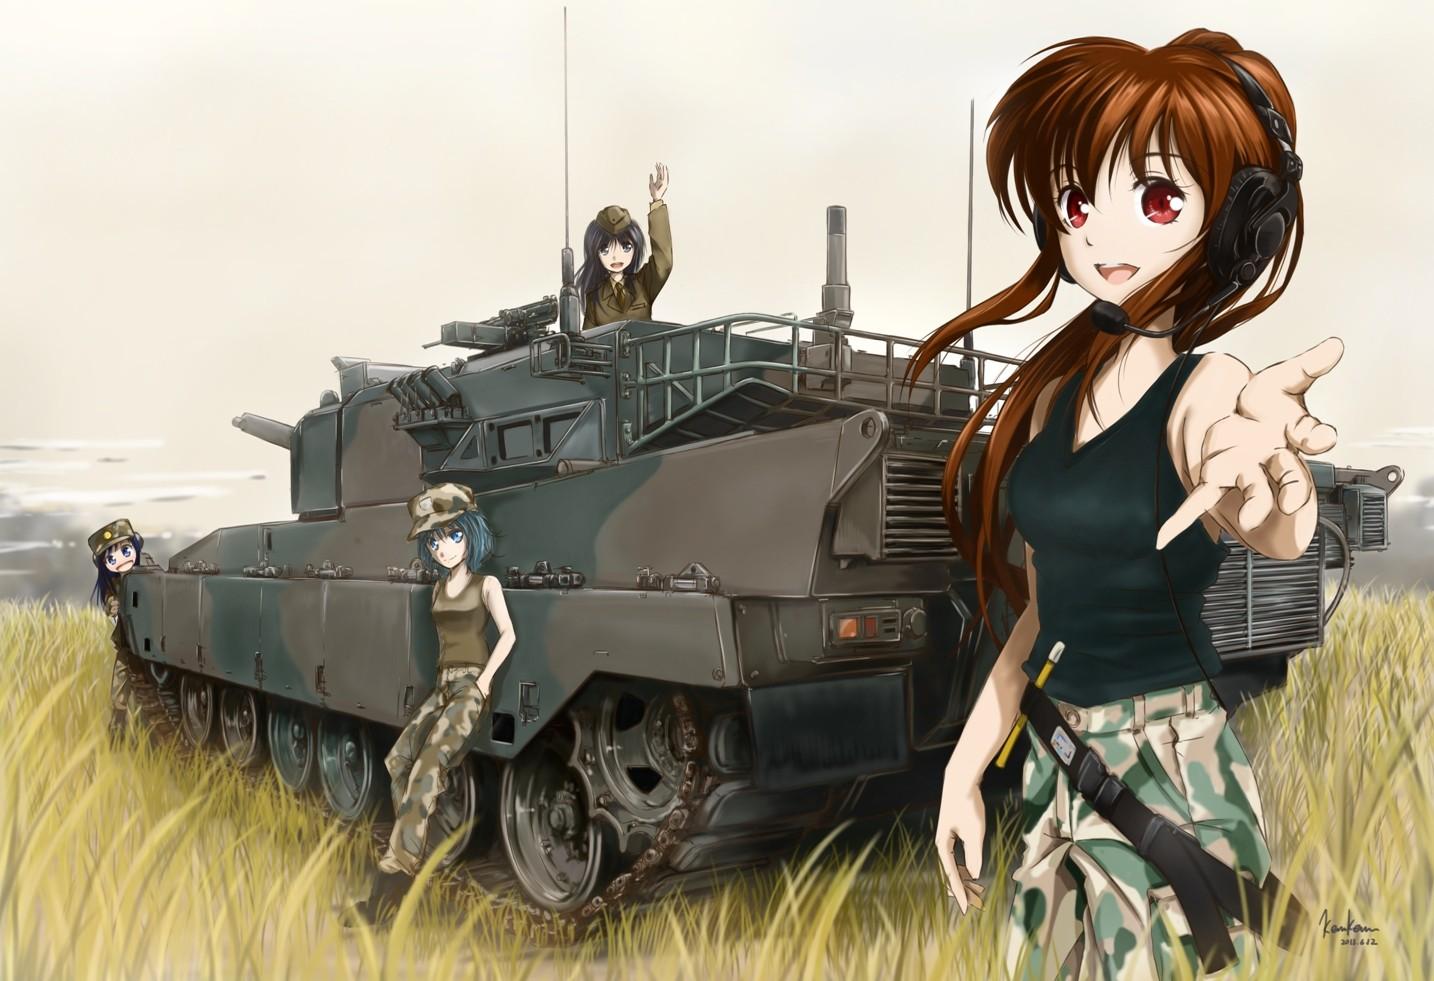 Posts with tags Anime military, Tanks - pikabu.monster